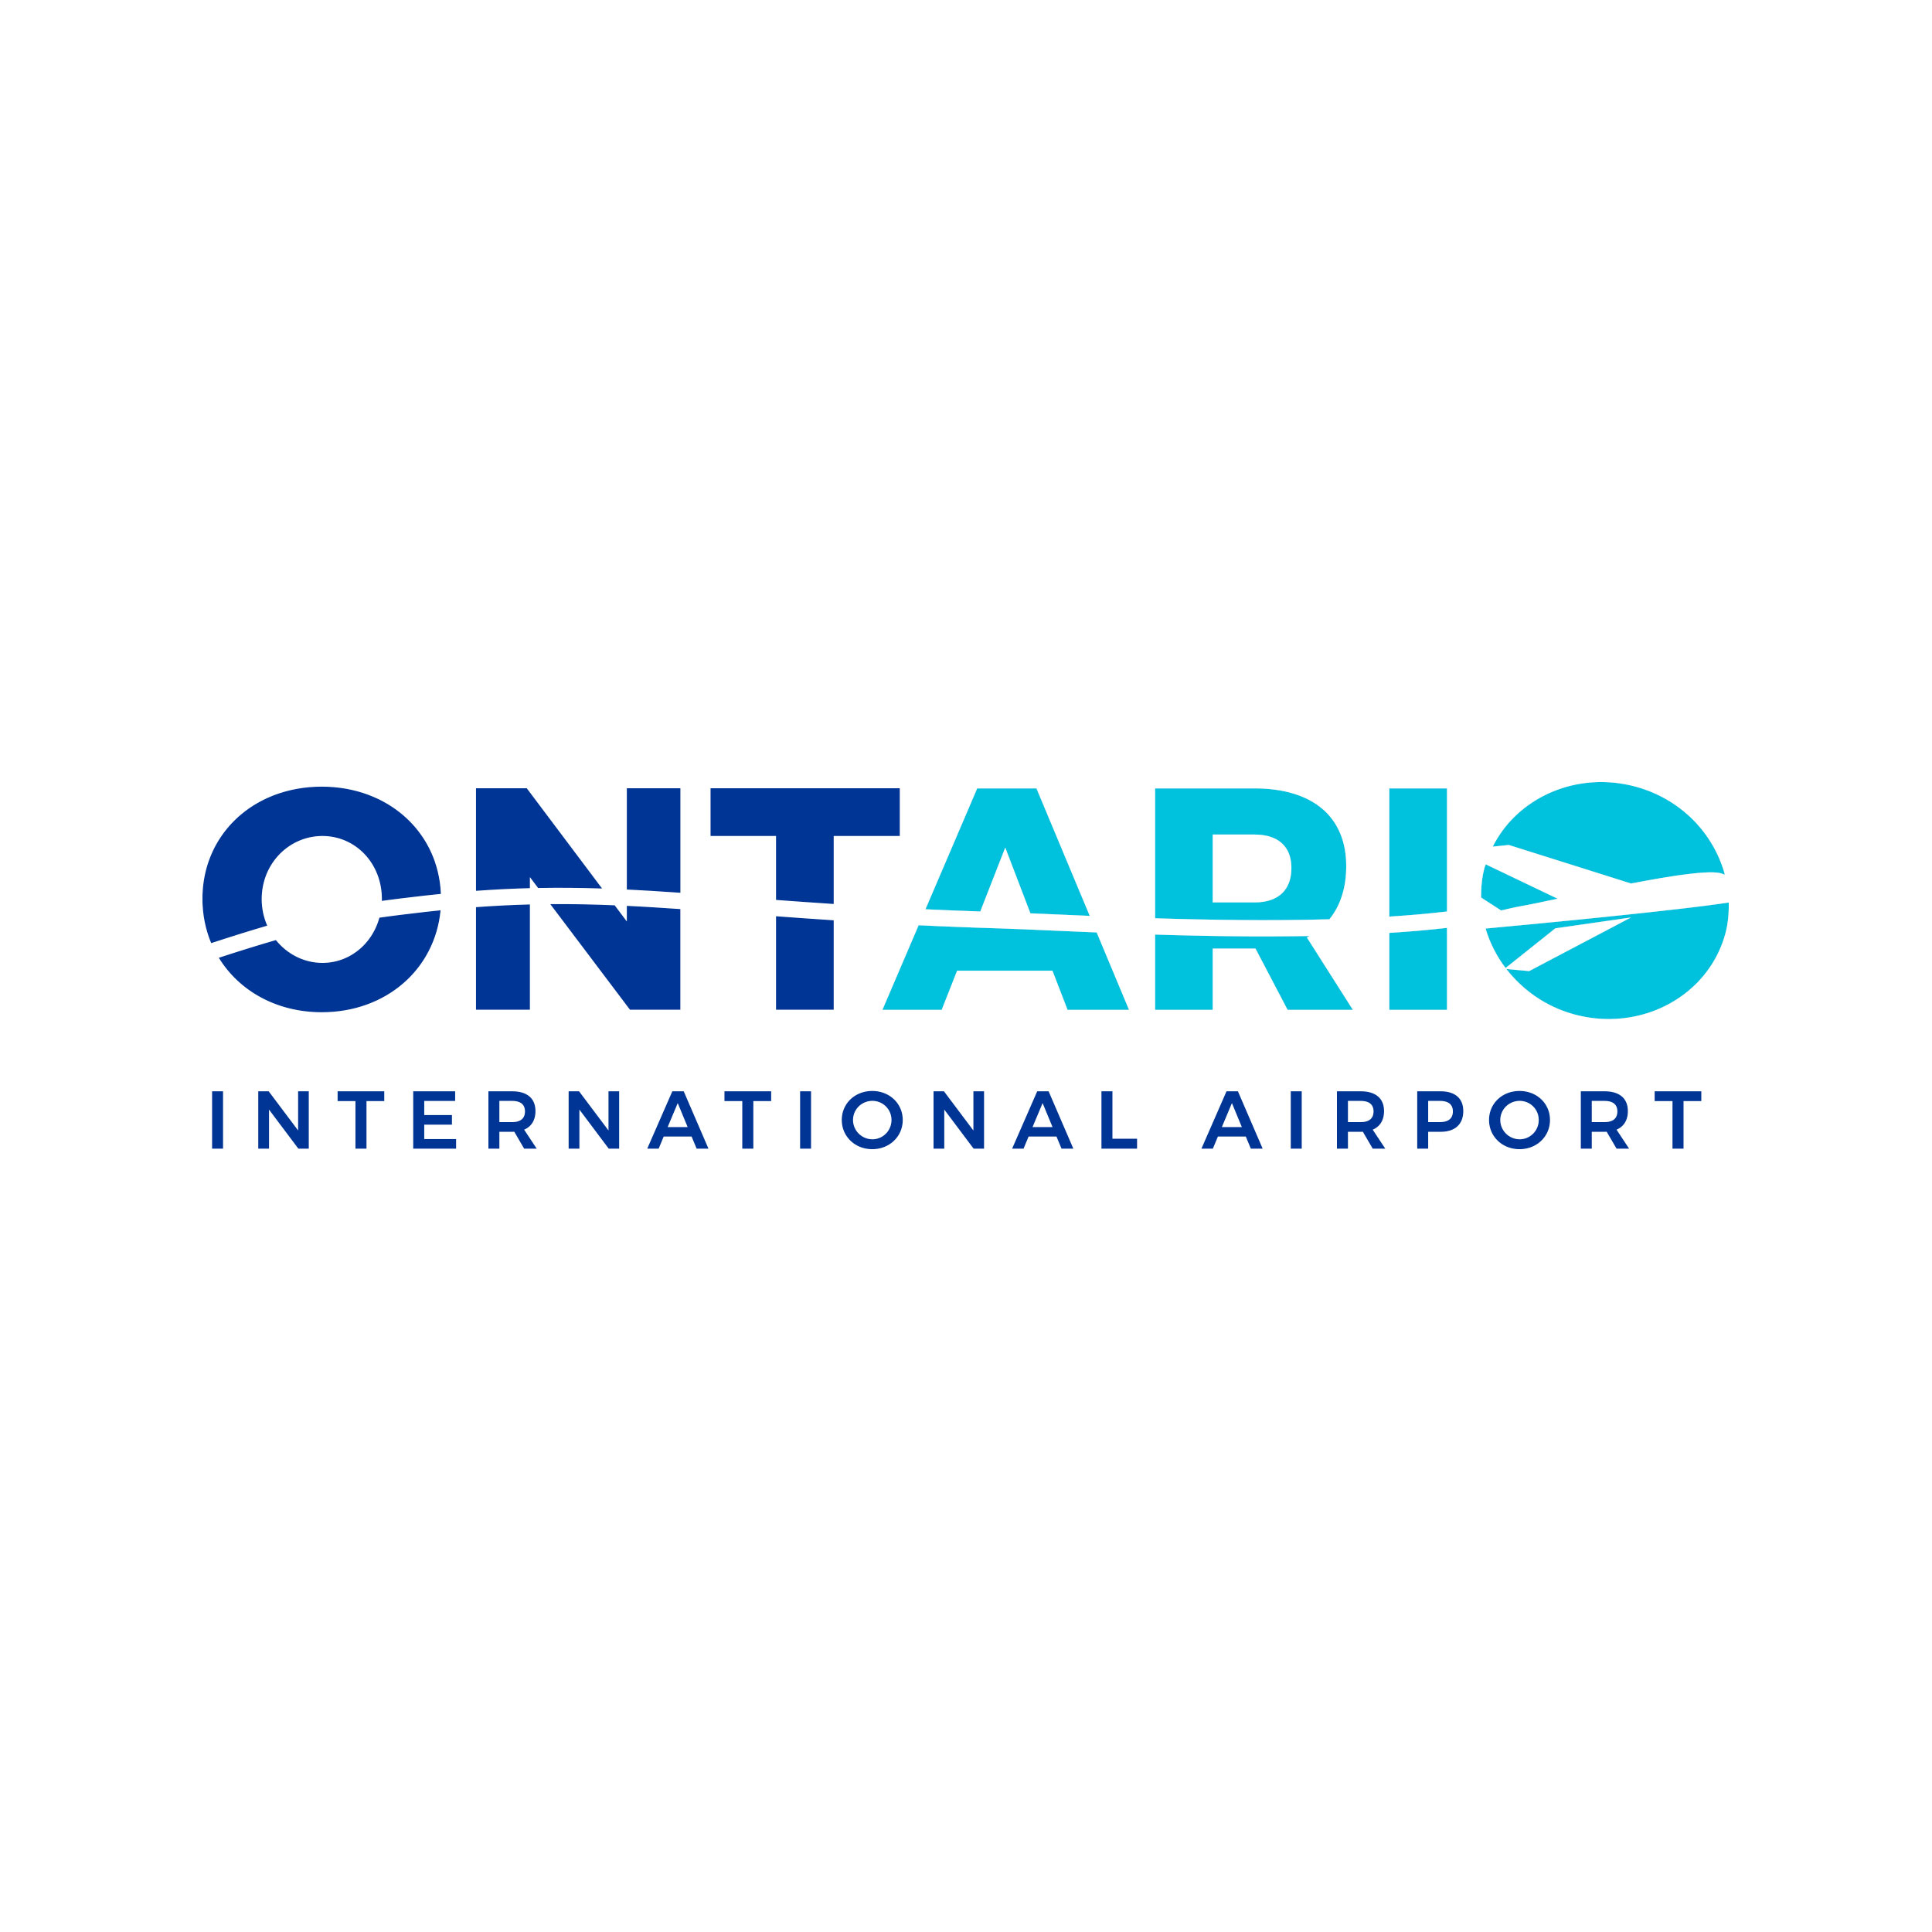 8409-2-OntarioInternationalAirport_Logo_1.jpg